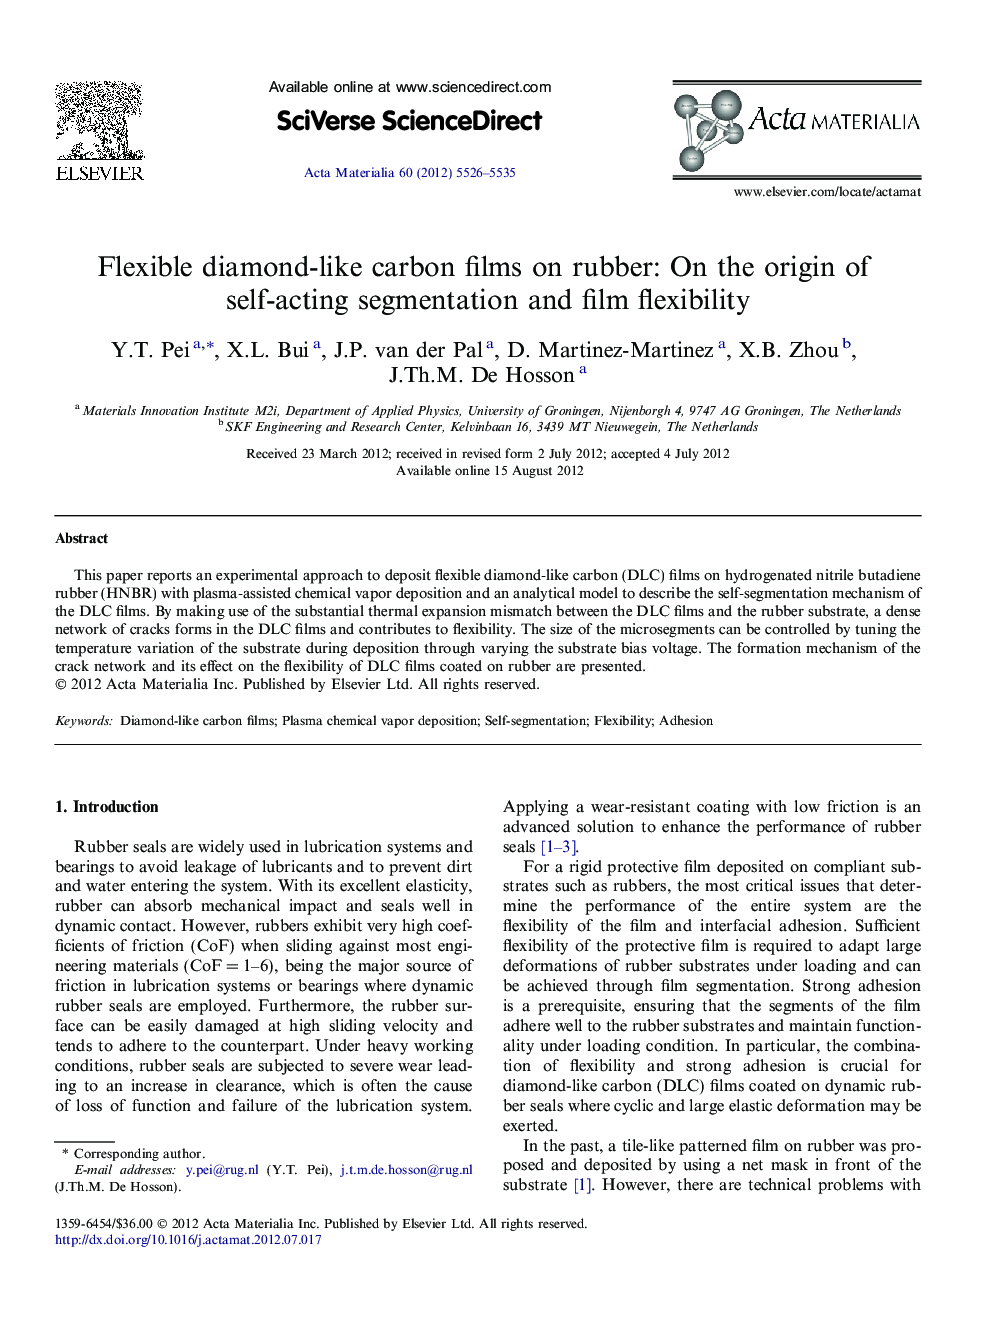 Flexible diamond-like carbon films on rubber: On the origin of self-acting segmentation and film flexibility